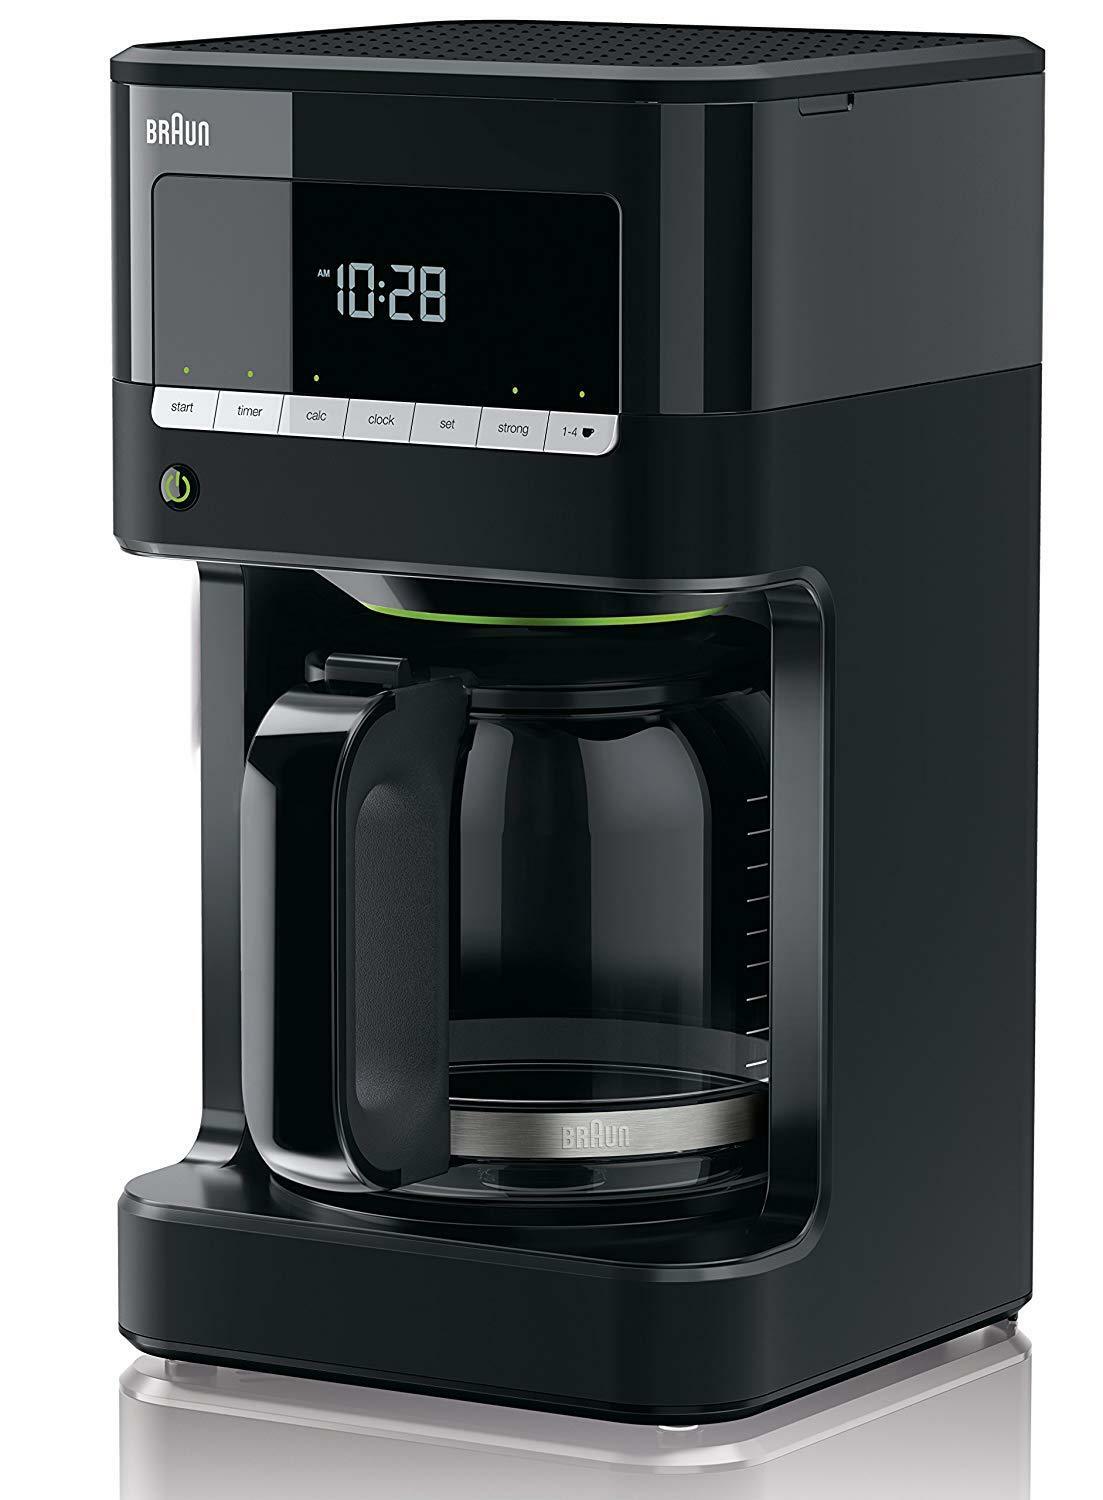 https://www.220stores.com/Shared/Images/Product/Braun-KF7020-220-Volt-12-Cup-Coffee-Maker-220V-240V-For-Export/KF7020.jpg